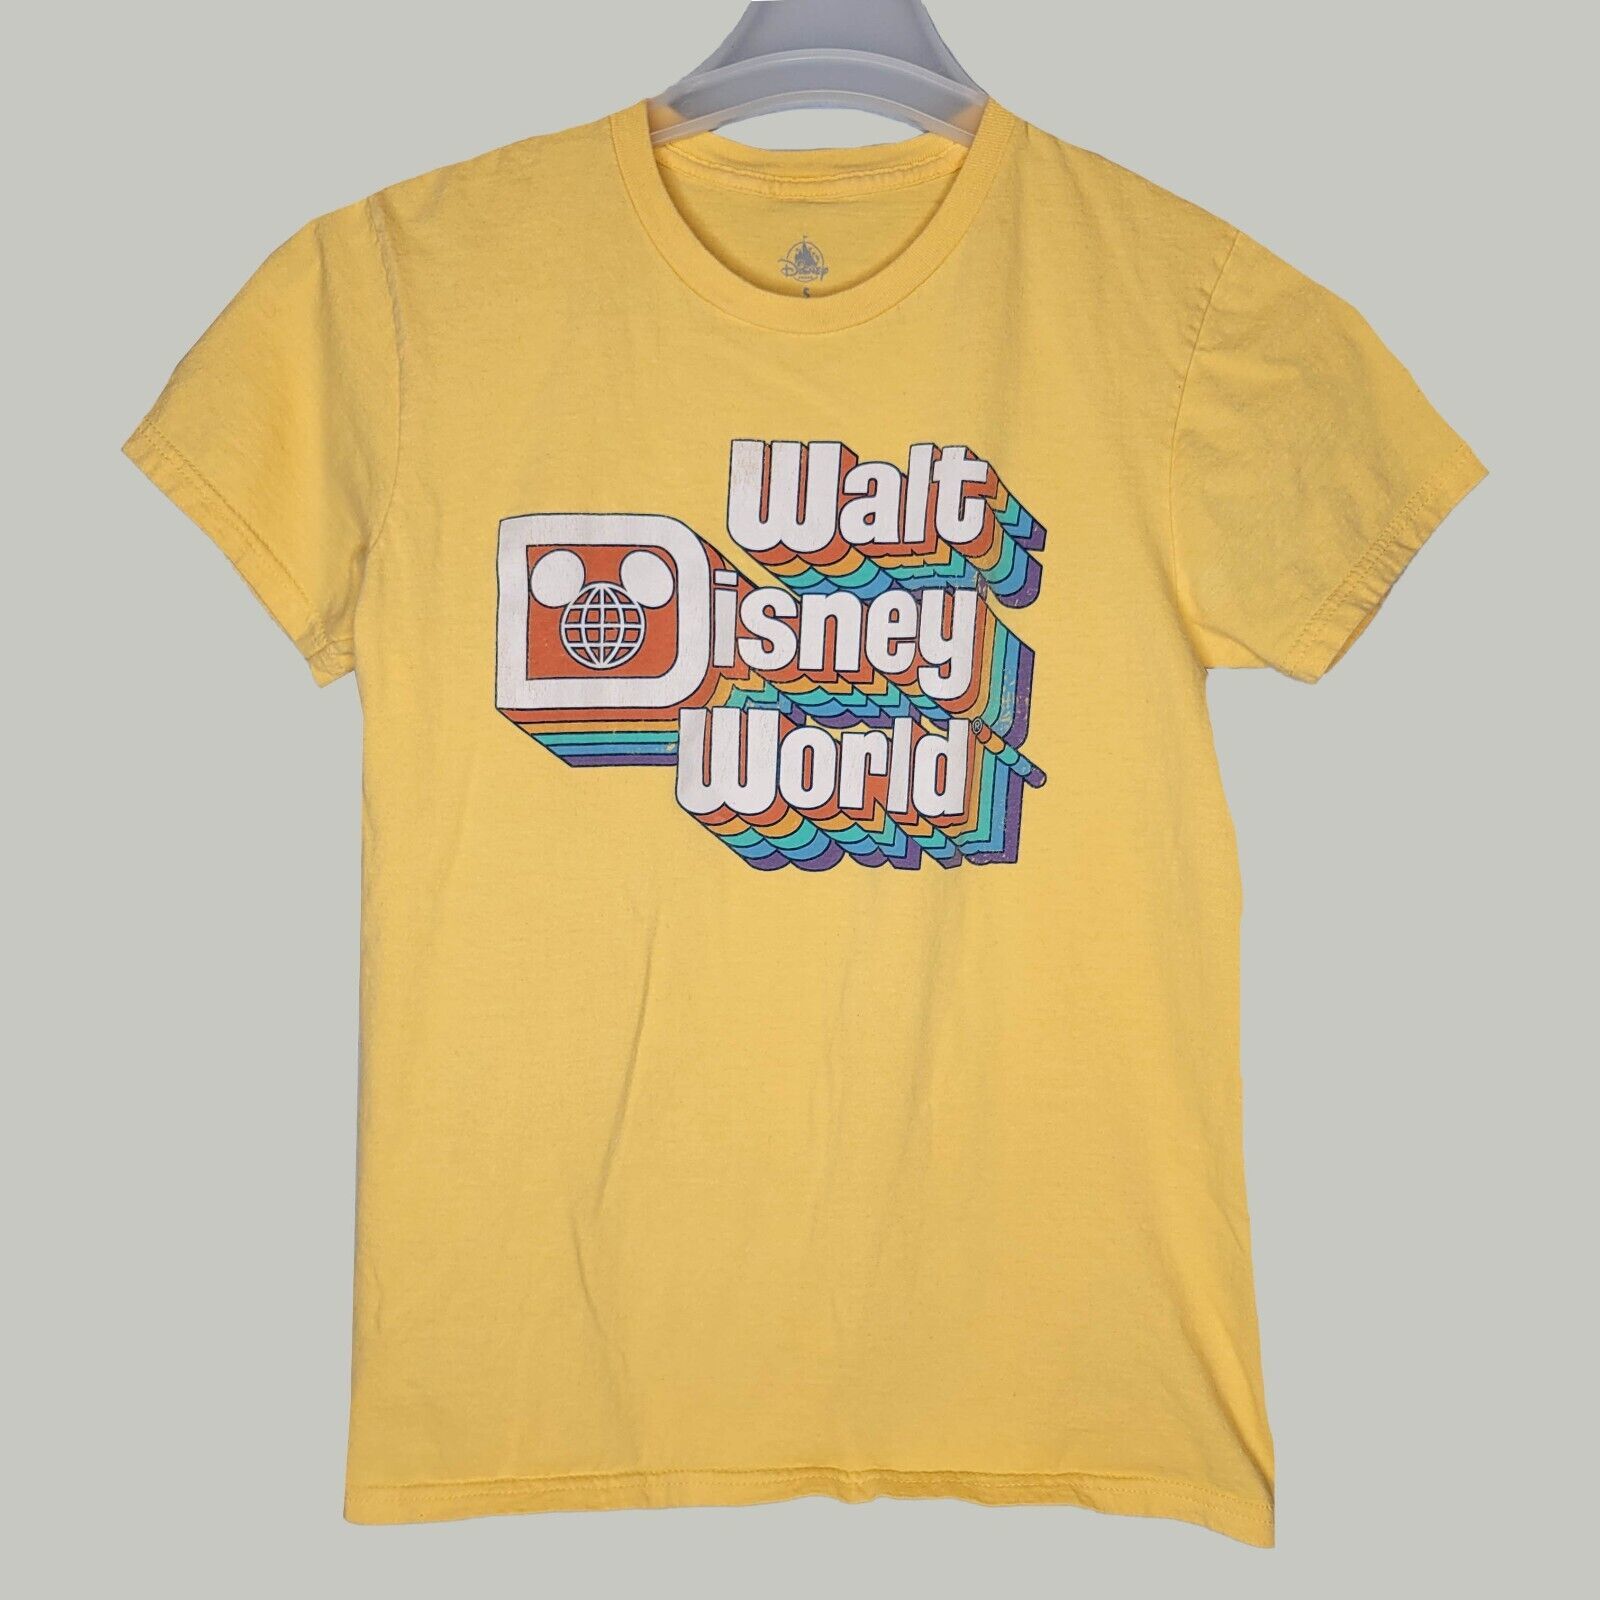 Walt Disney World Shirt Womens Small Yellow Short Sleeve - $14.96